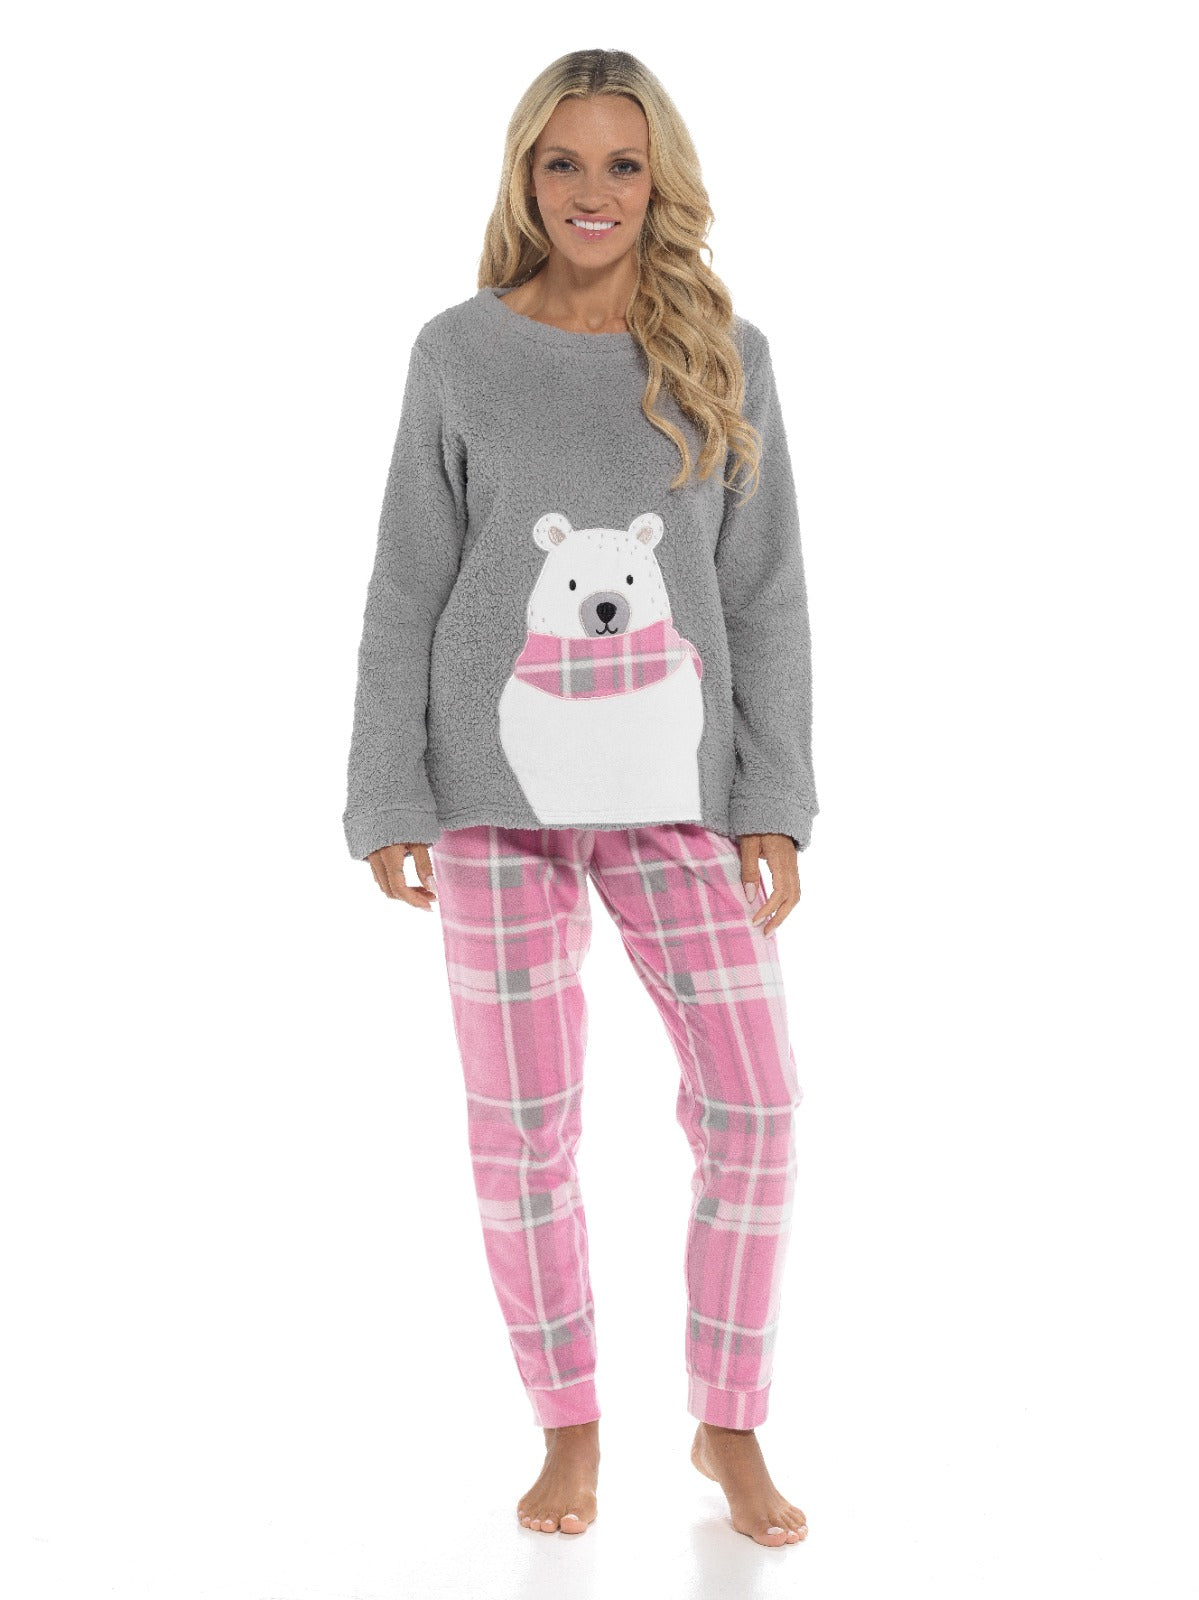 Women's Polar Bear Snuggle Fleece Ladies Pyjama Set. Buy now for £20.00. A Pyjamas by Daisy Dreamer. 12-14, 16-18, 18-20, 20-22, blush pink, check, check designs, daisy dreamer, dusky pink, extra large, girls, grey, gym, hot pink, ladies, large, long slee